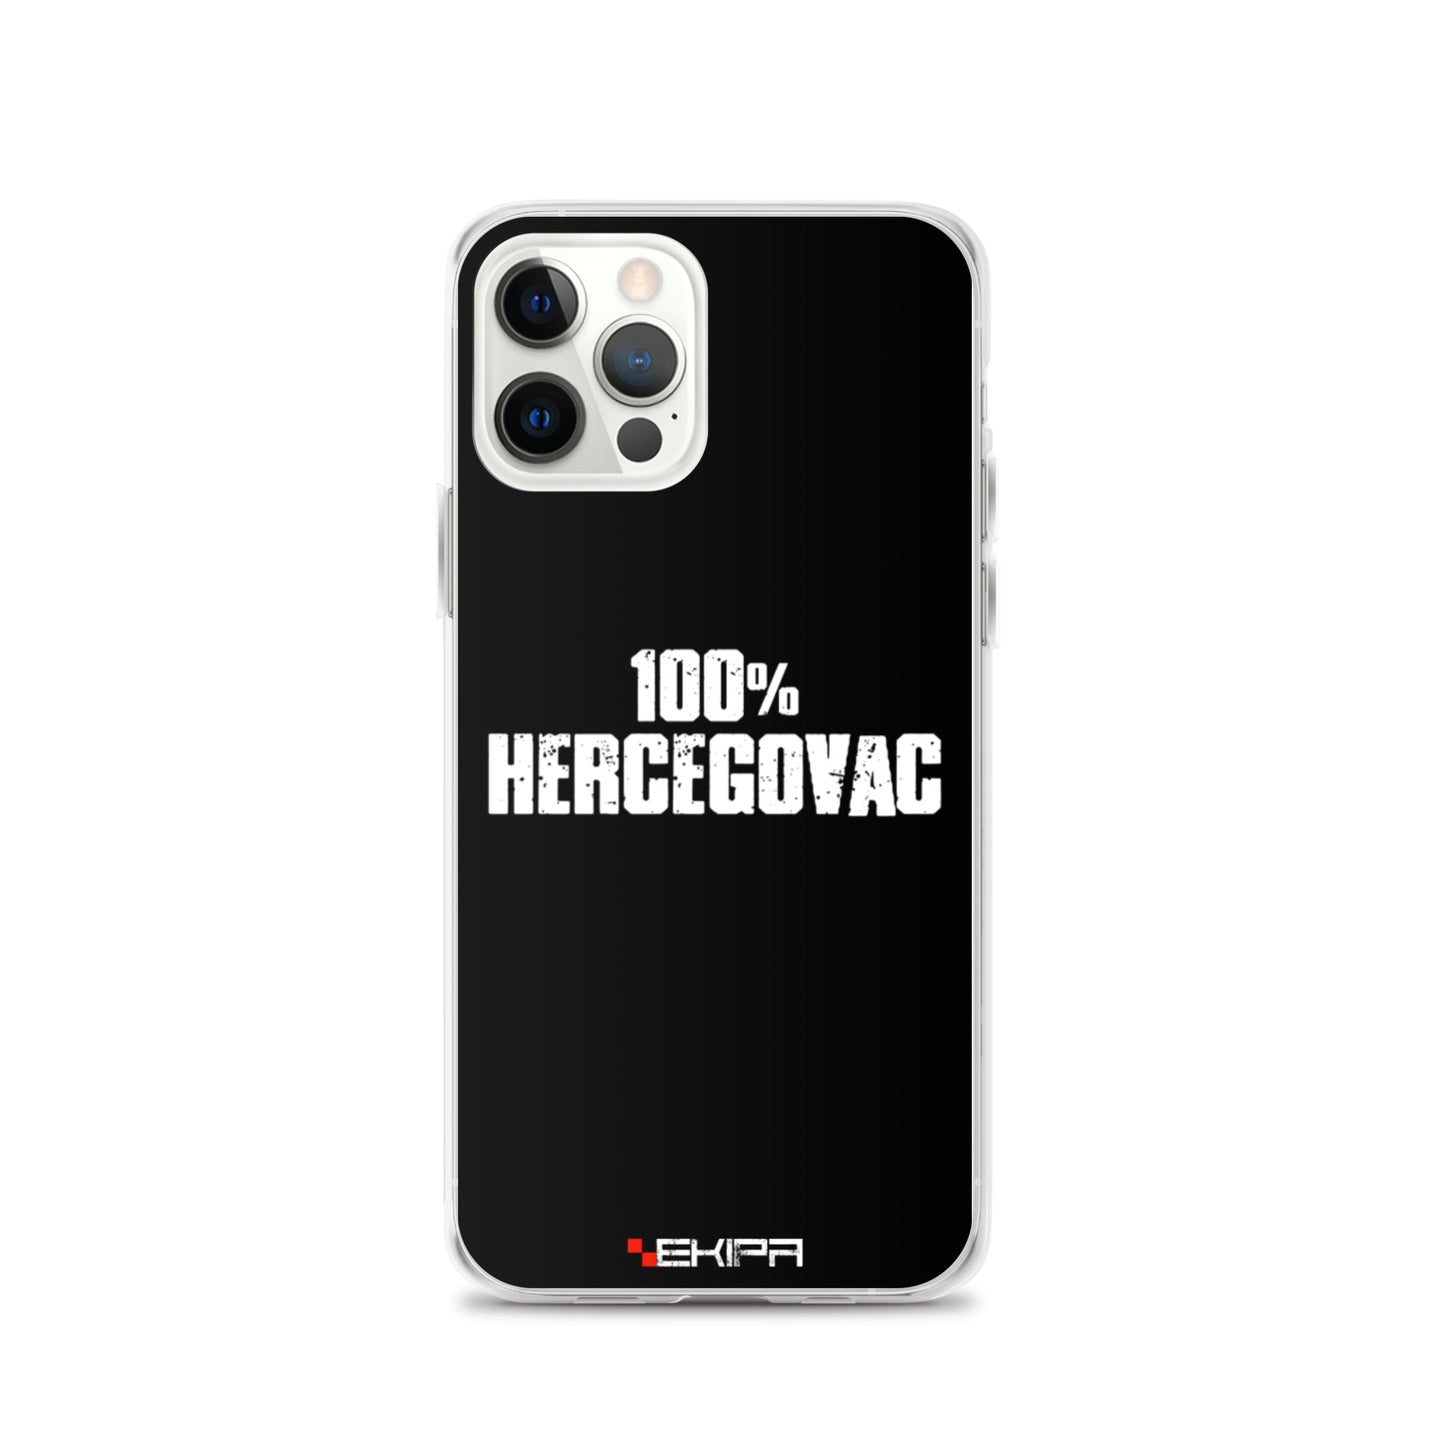 "100% Hercegovac" - iPhone case